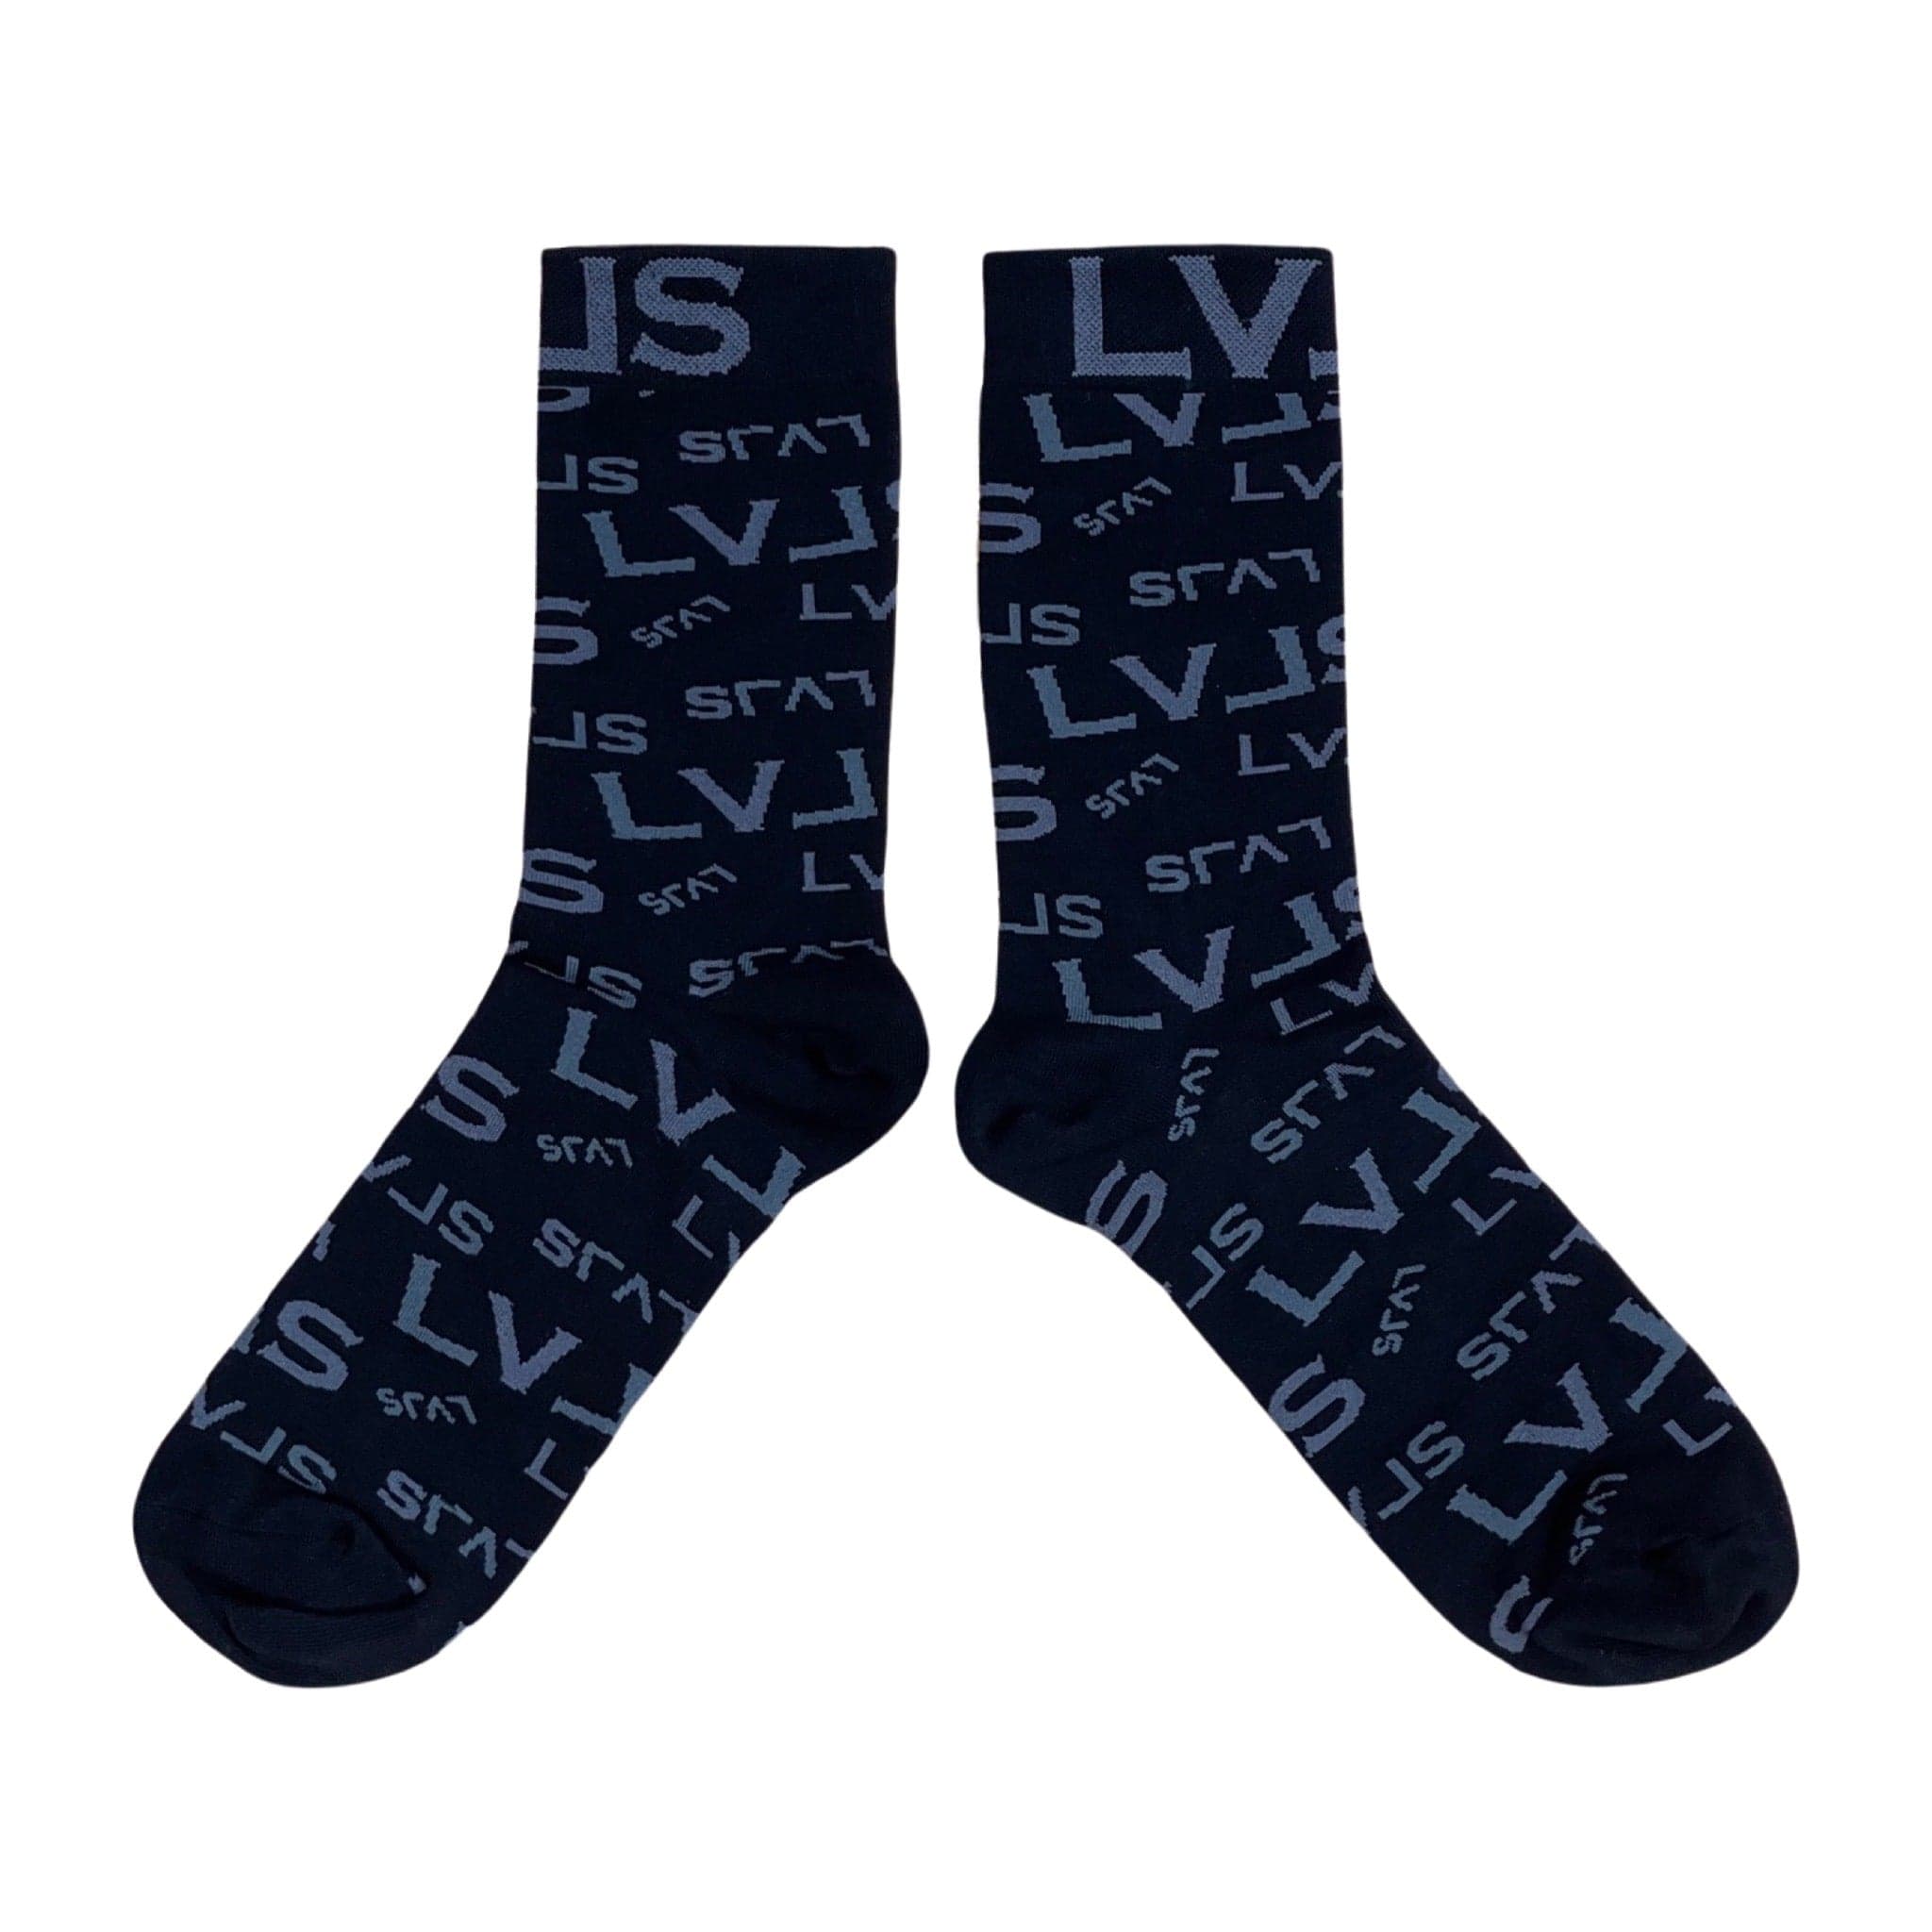 LEVELS, LLC Socks LVLS Socks Multi LVLS SOCKS (BLACK & CHARCOAL)